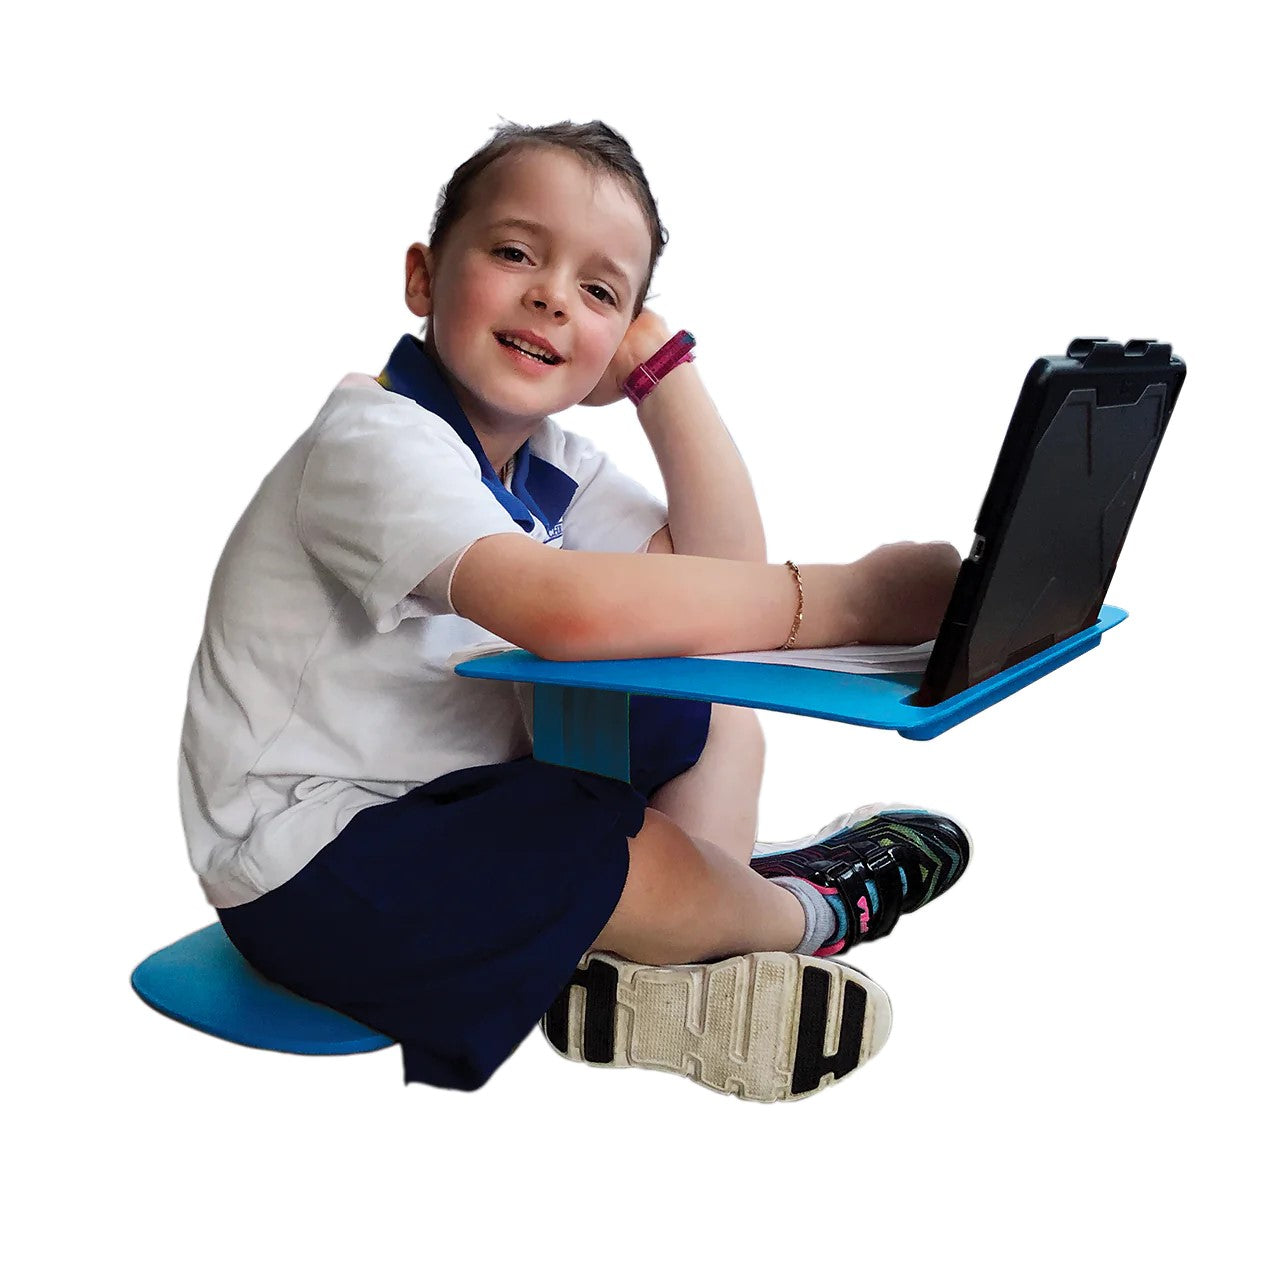 Child using Elizabeth Richards Flexi Desk